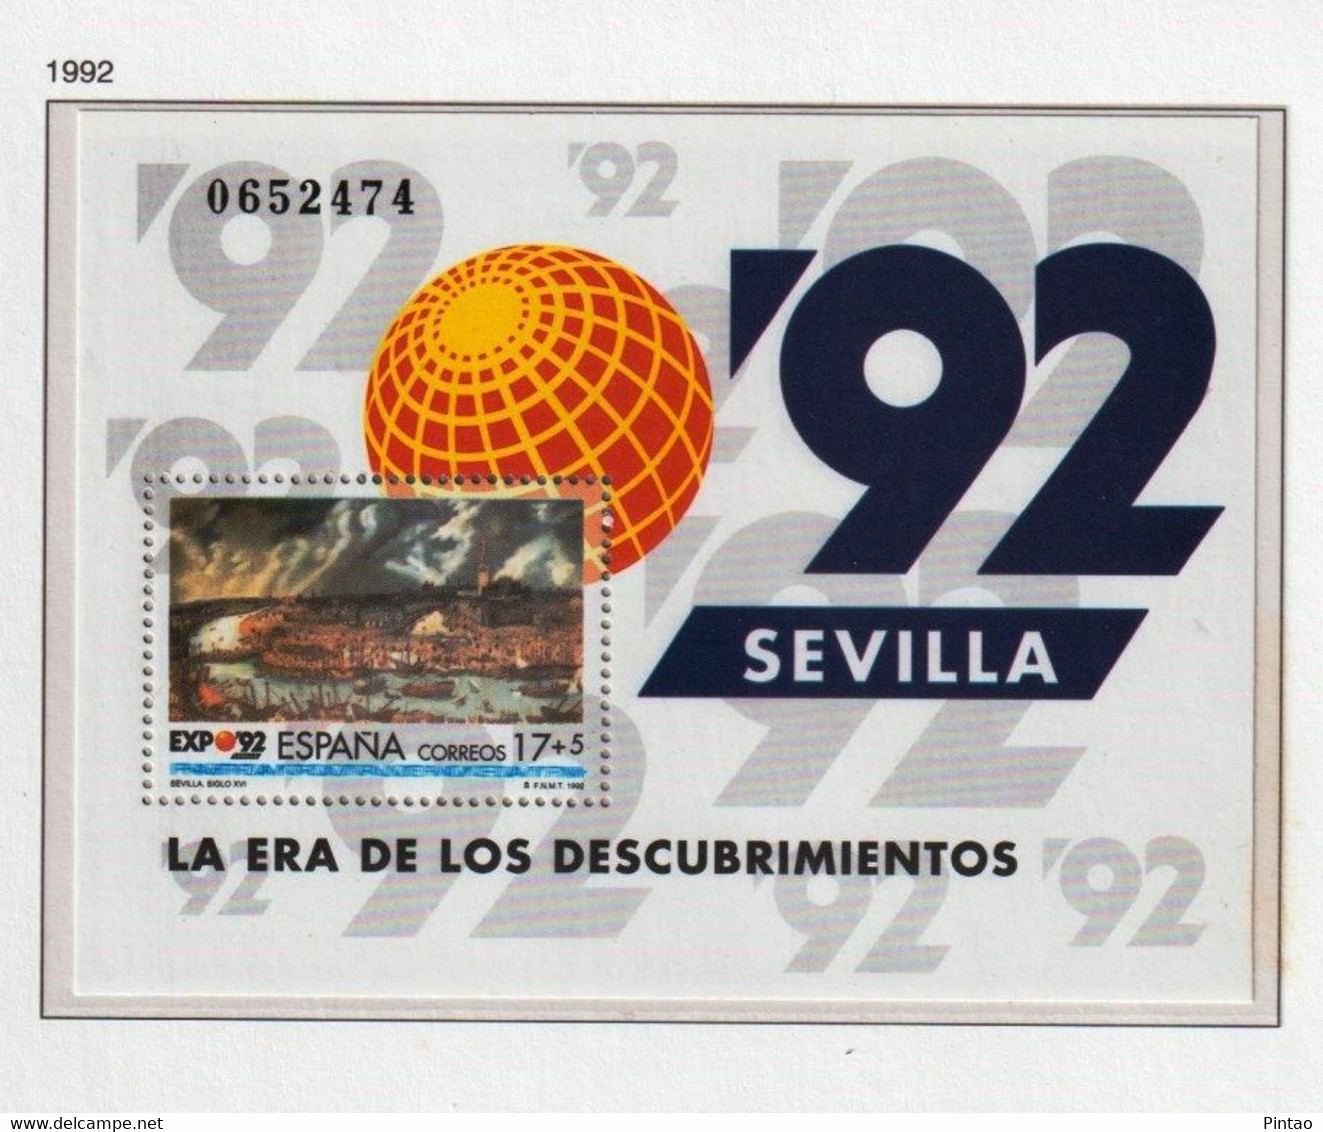 ESPANHA 1992 -  MNH (Sevilha 92)_ SPB0005 - Blocs & Hojas